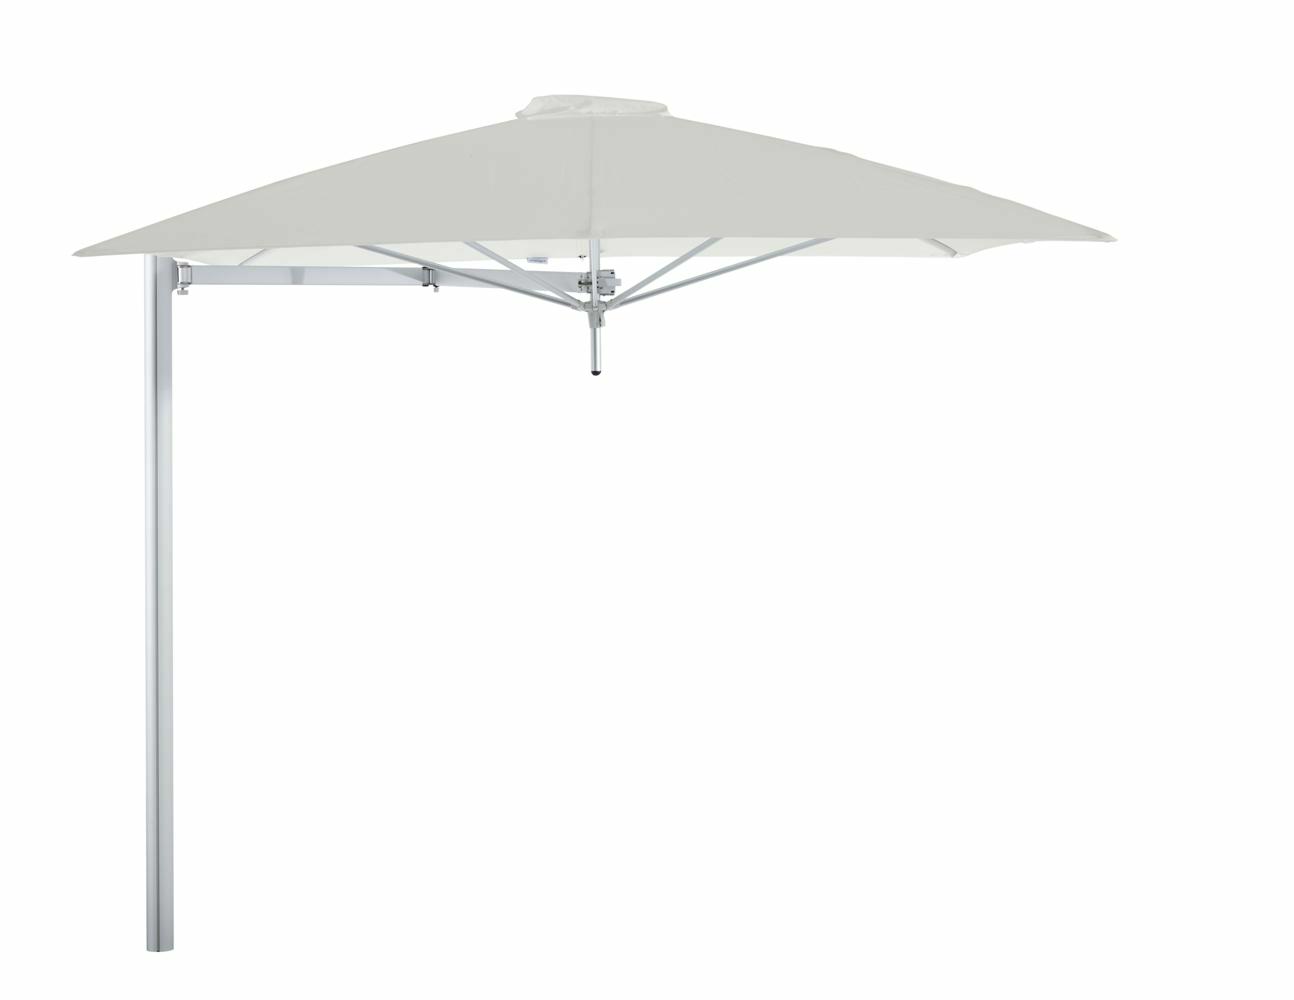 Paraflex cantilever umbrella square 2,3 m with Canvas fabric and a Neo arm